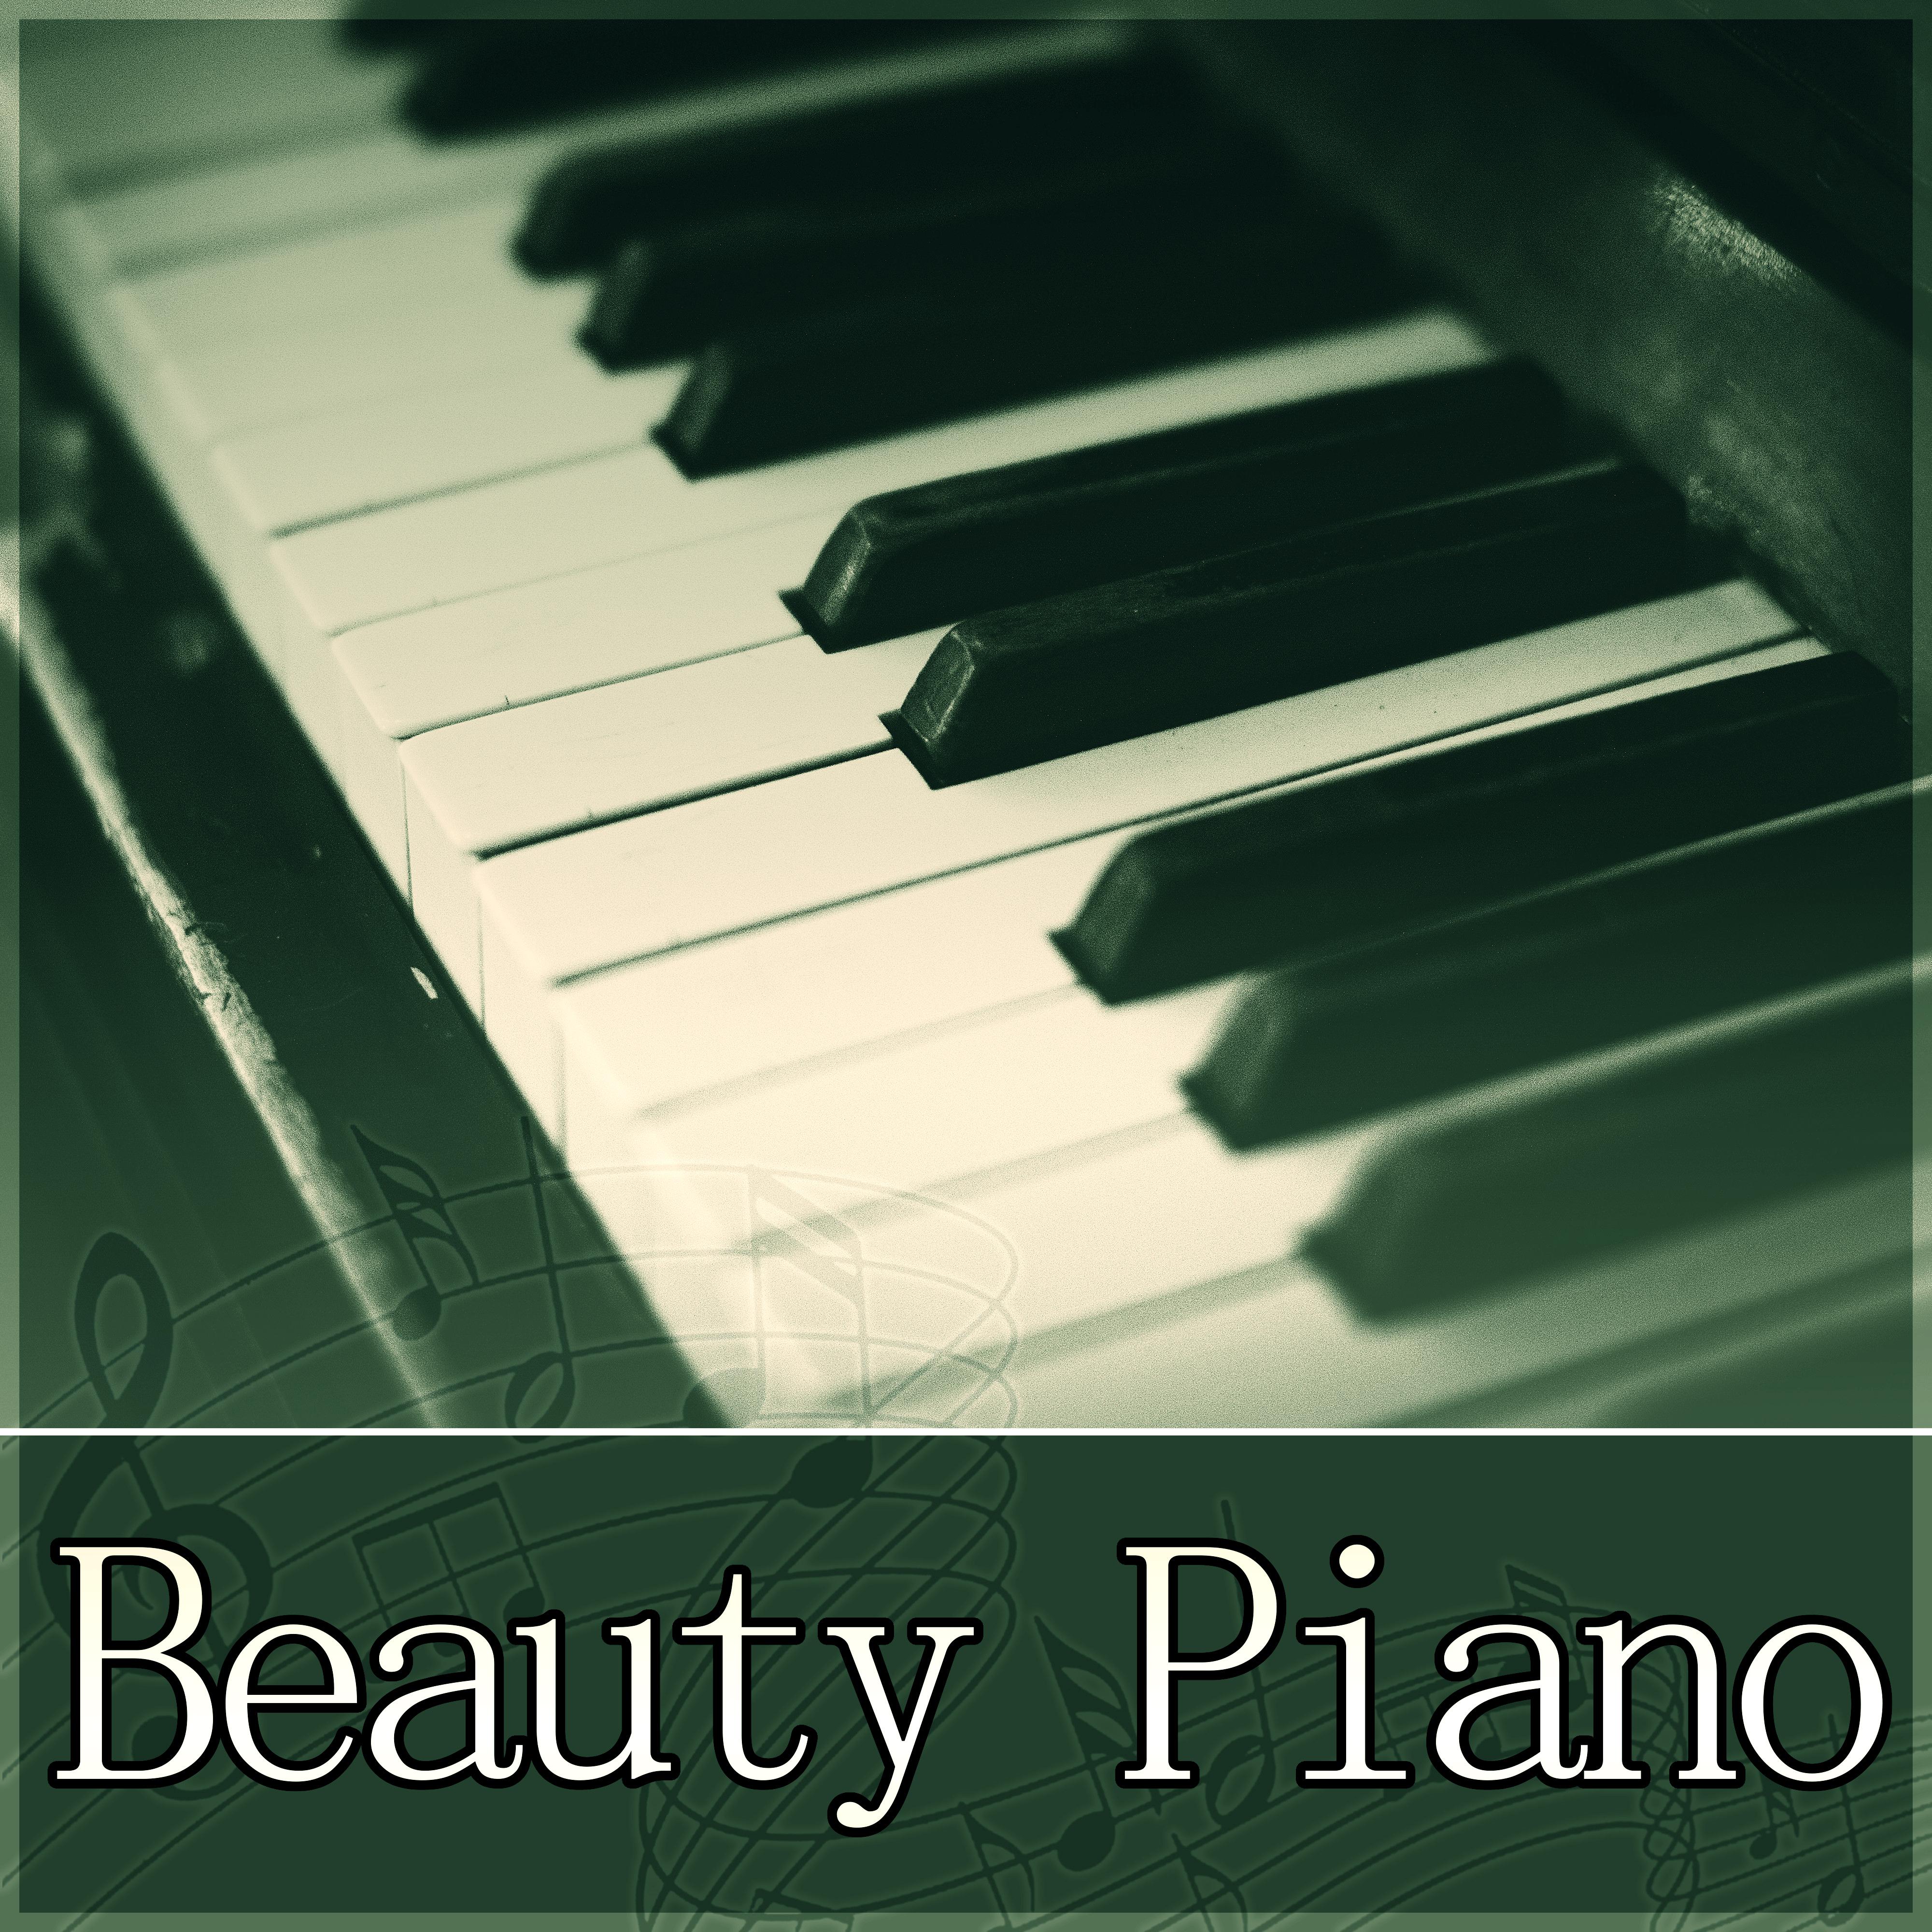 Beauty Piano - Smooth Music, Calm Music, Secret Piano, Guitar, Romance, Mood, Lovers, Emotion, Sensuality, Sentimental Piano, Party, Spa